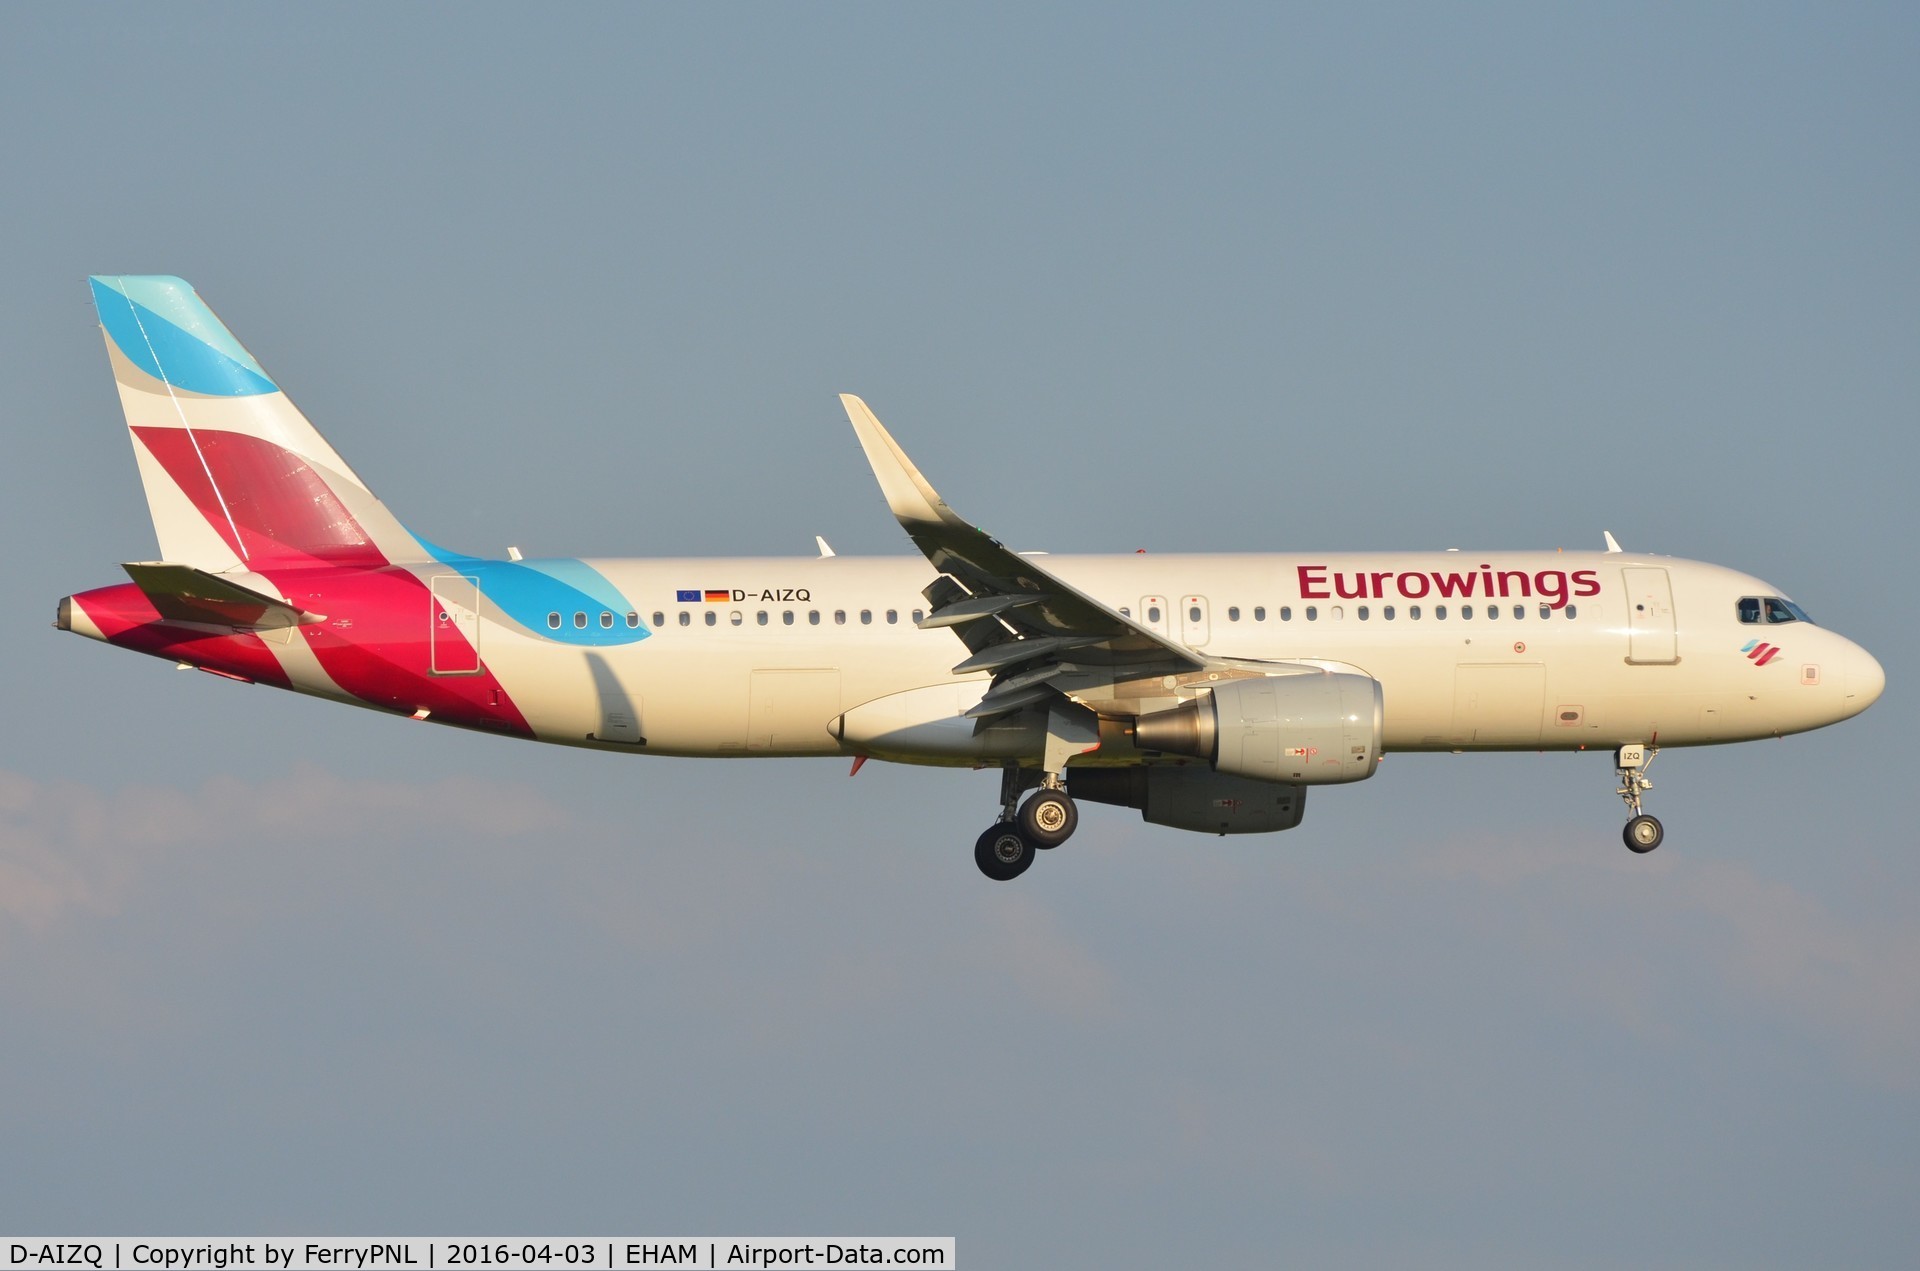 D-AIZQ, 2013 Airbus A320-214 C/N 5497, Eurowings A320 landing in AMS